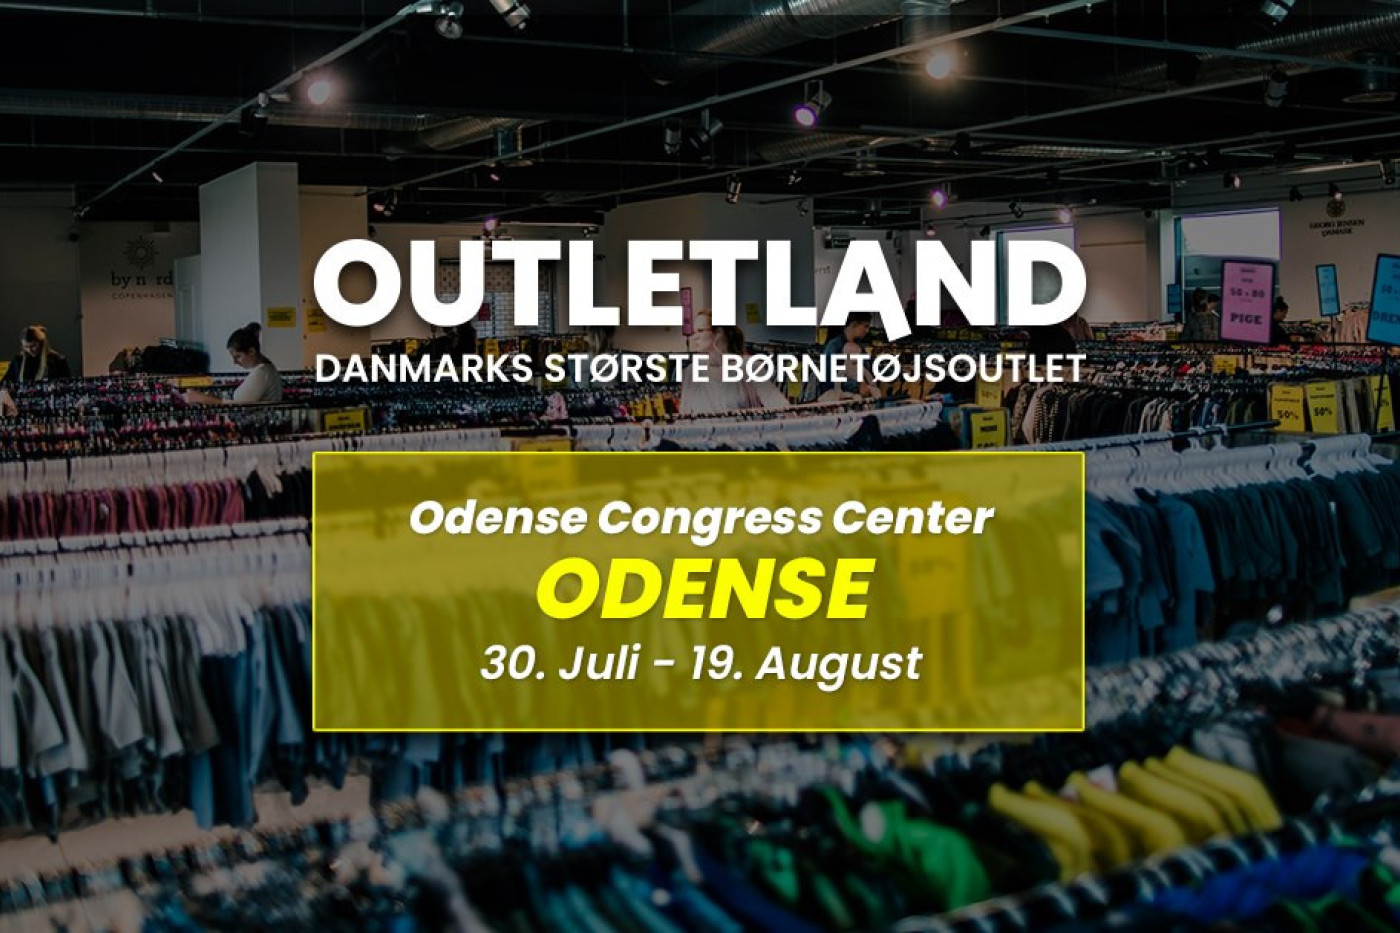 Outletland Odense